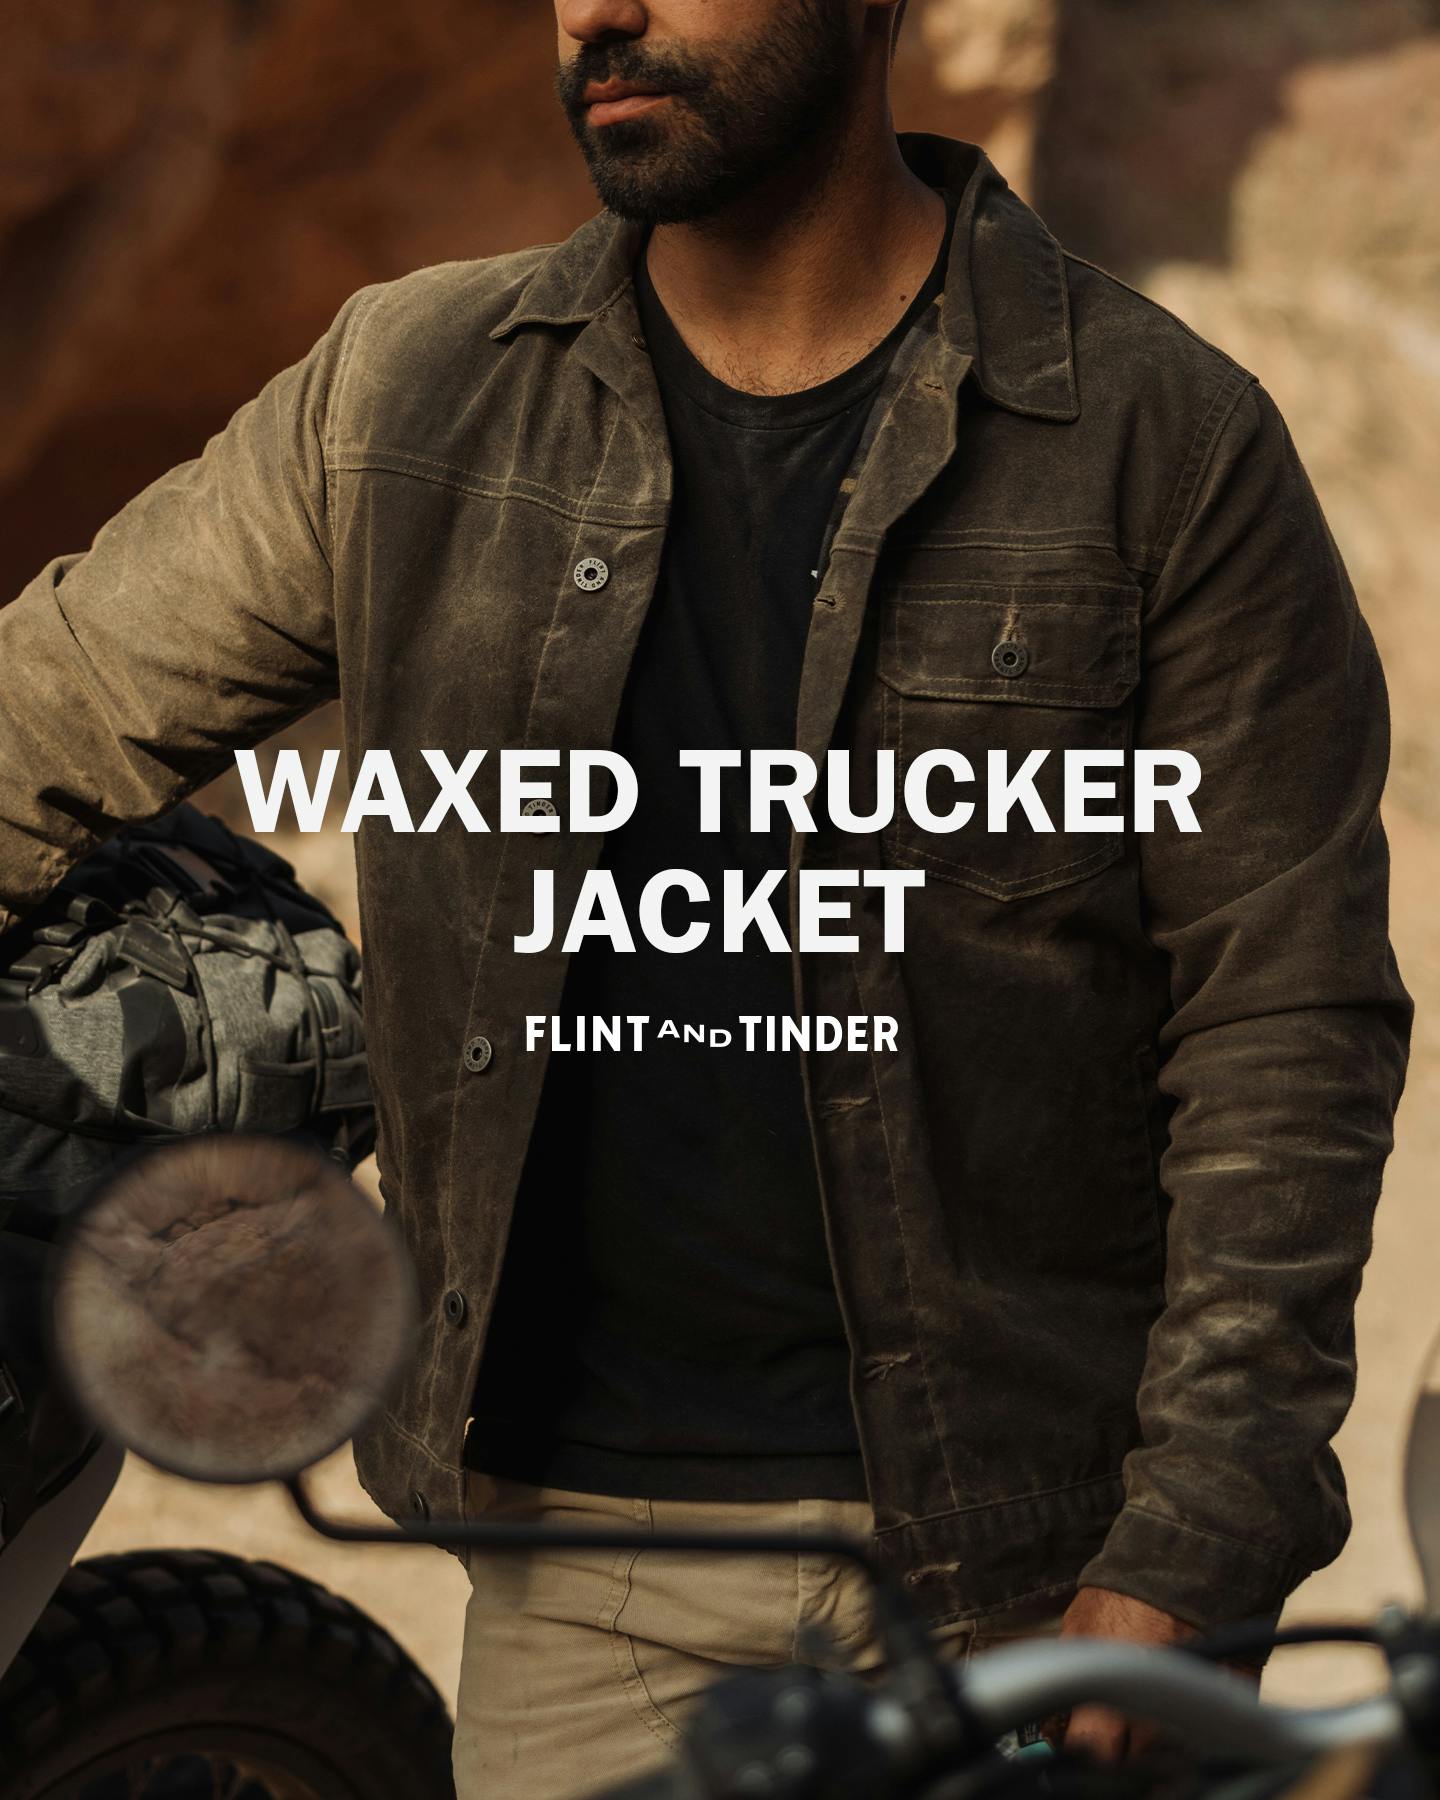 Waxed Trucker Jacket text over image of man wearing jacket